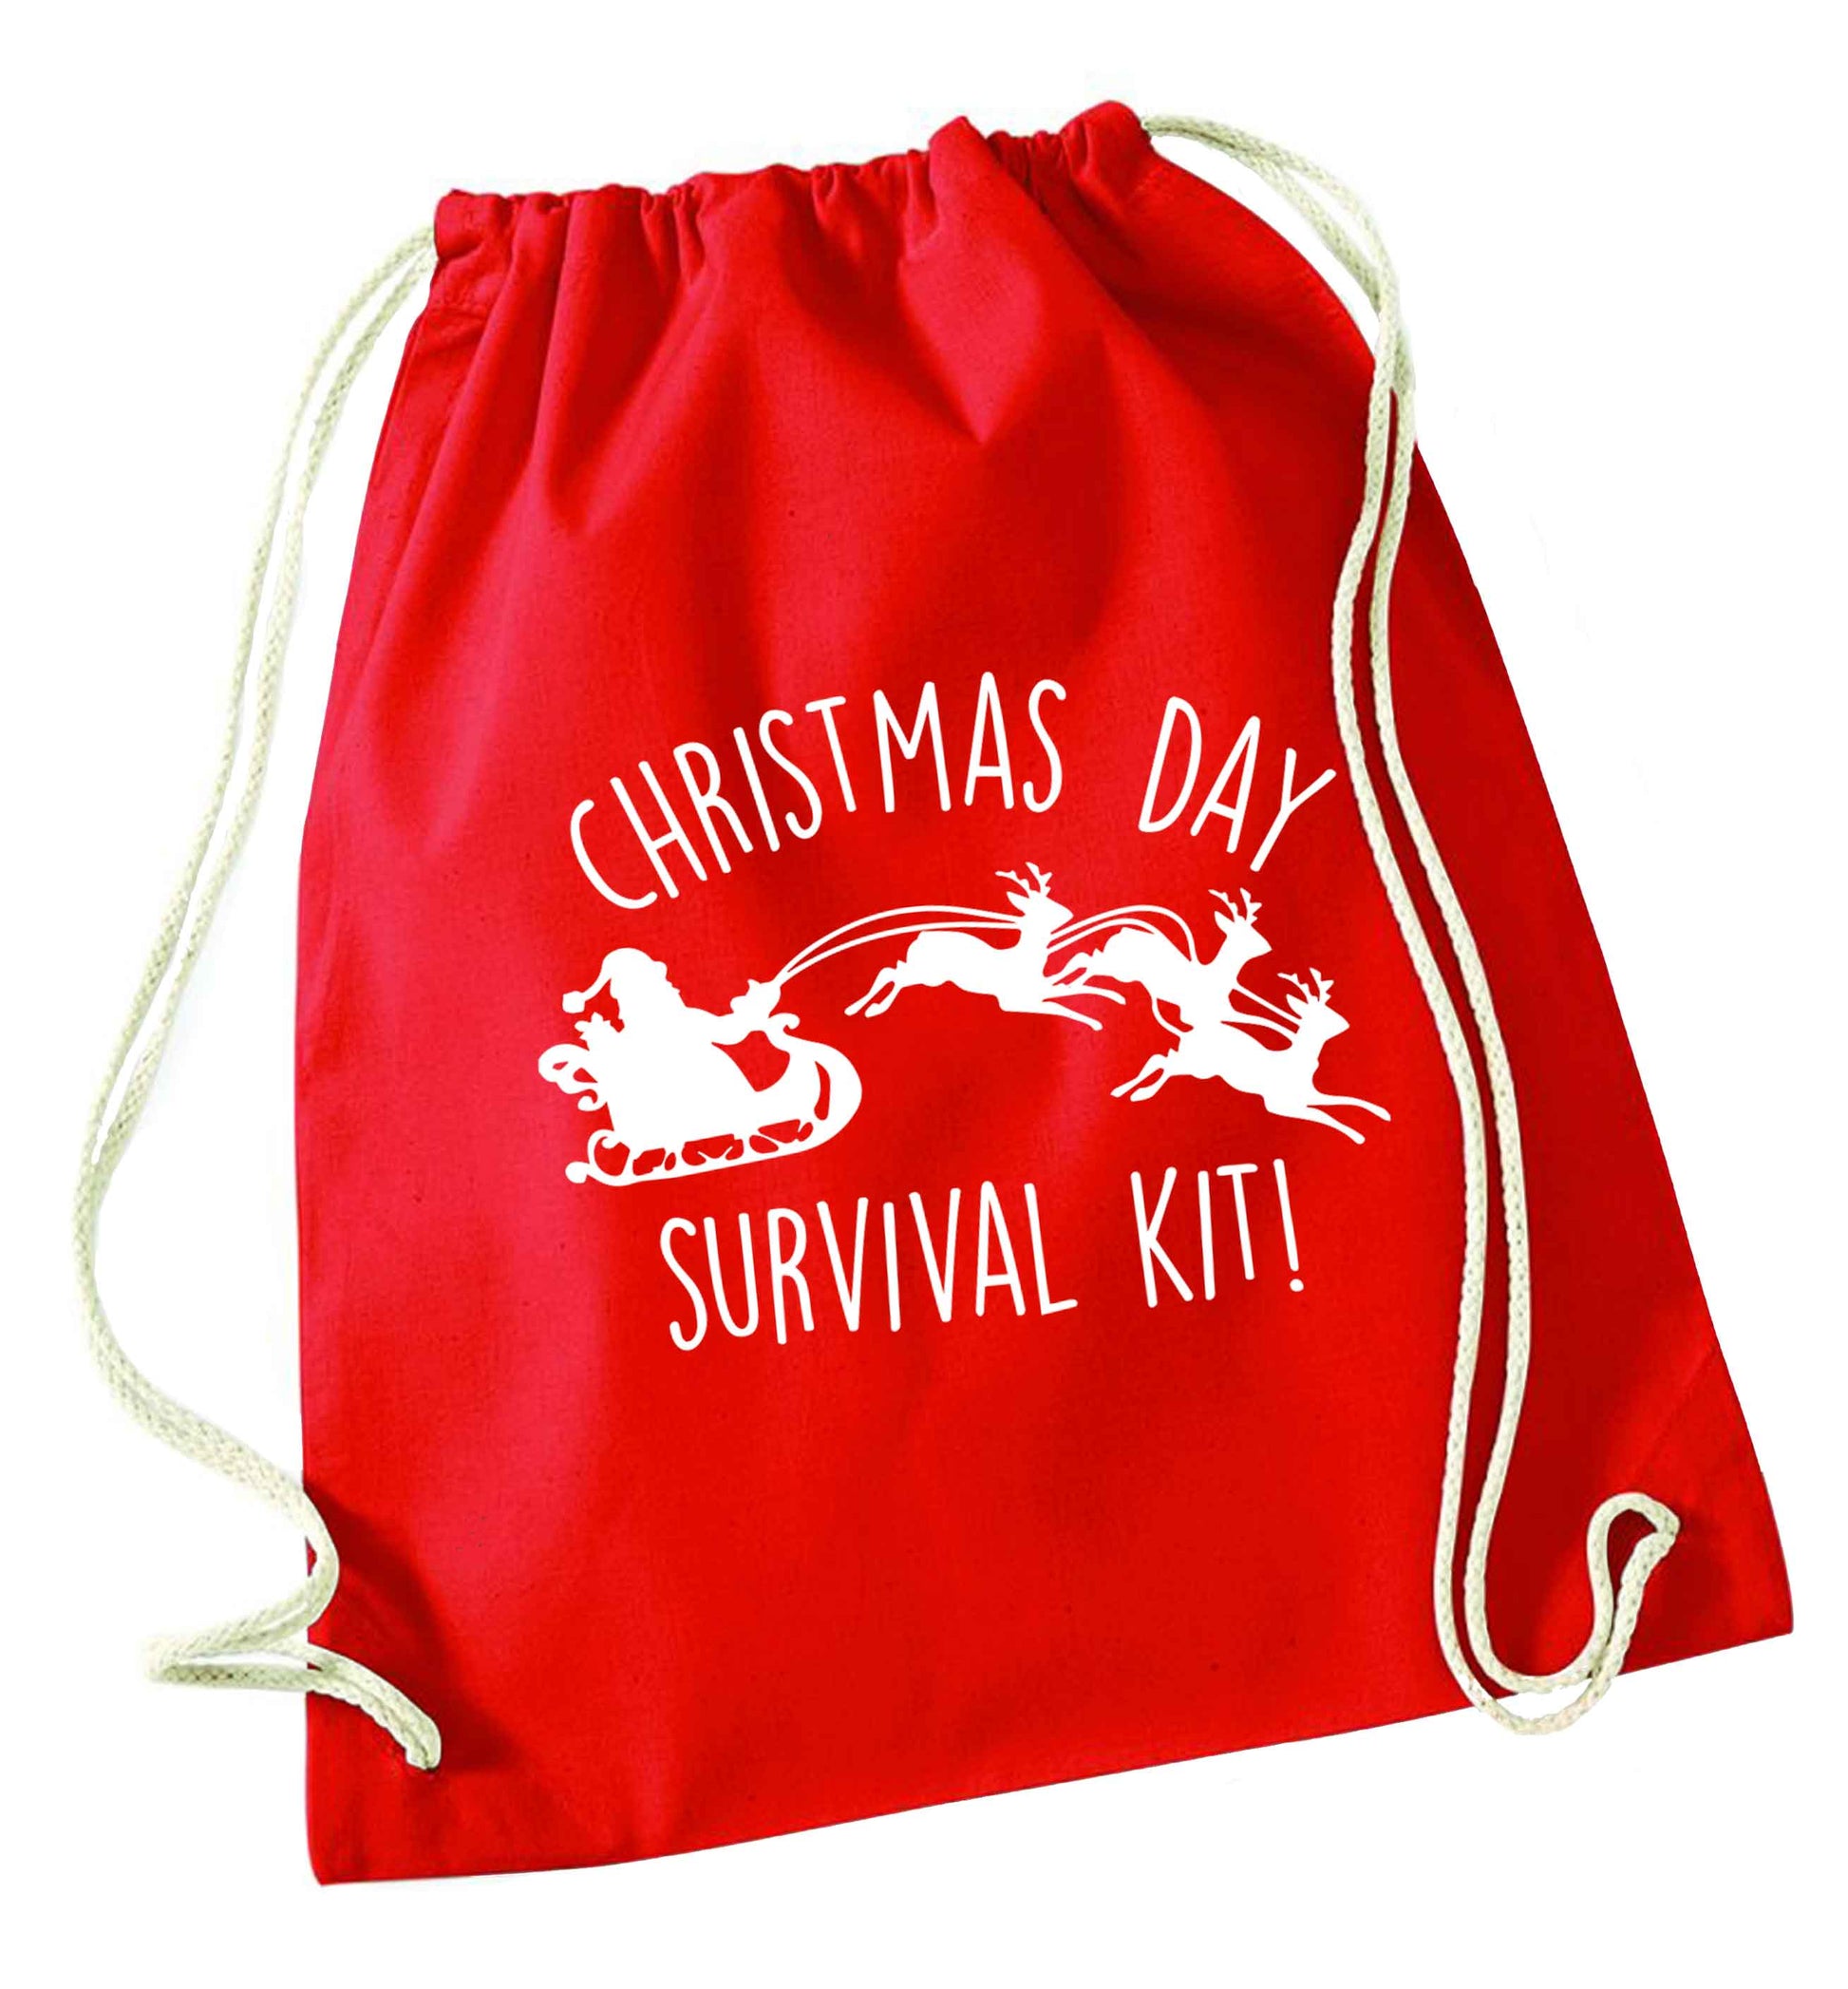 Christmas Day Survival Kitred drawstring bag 